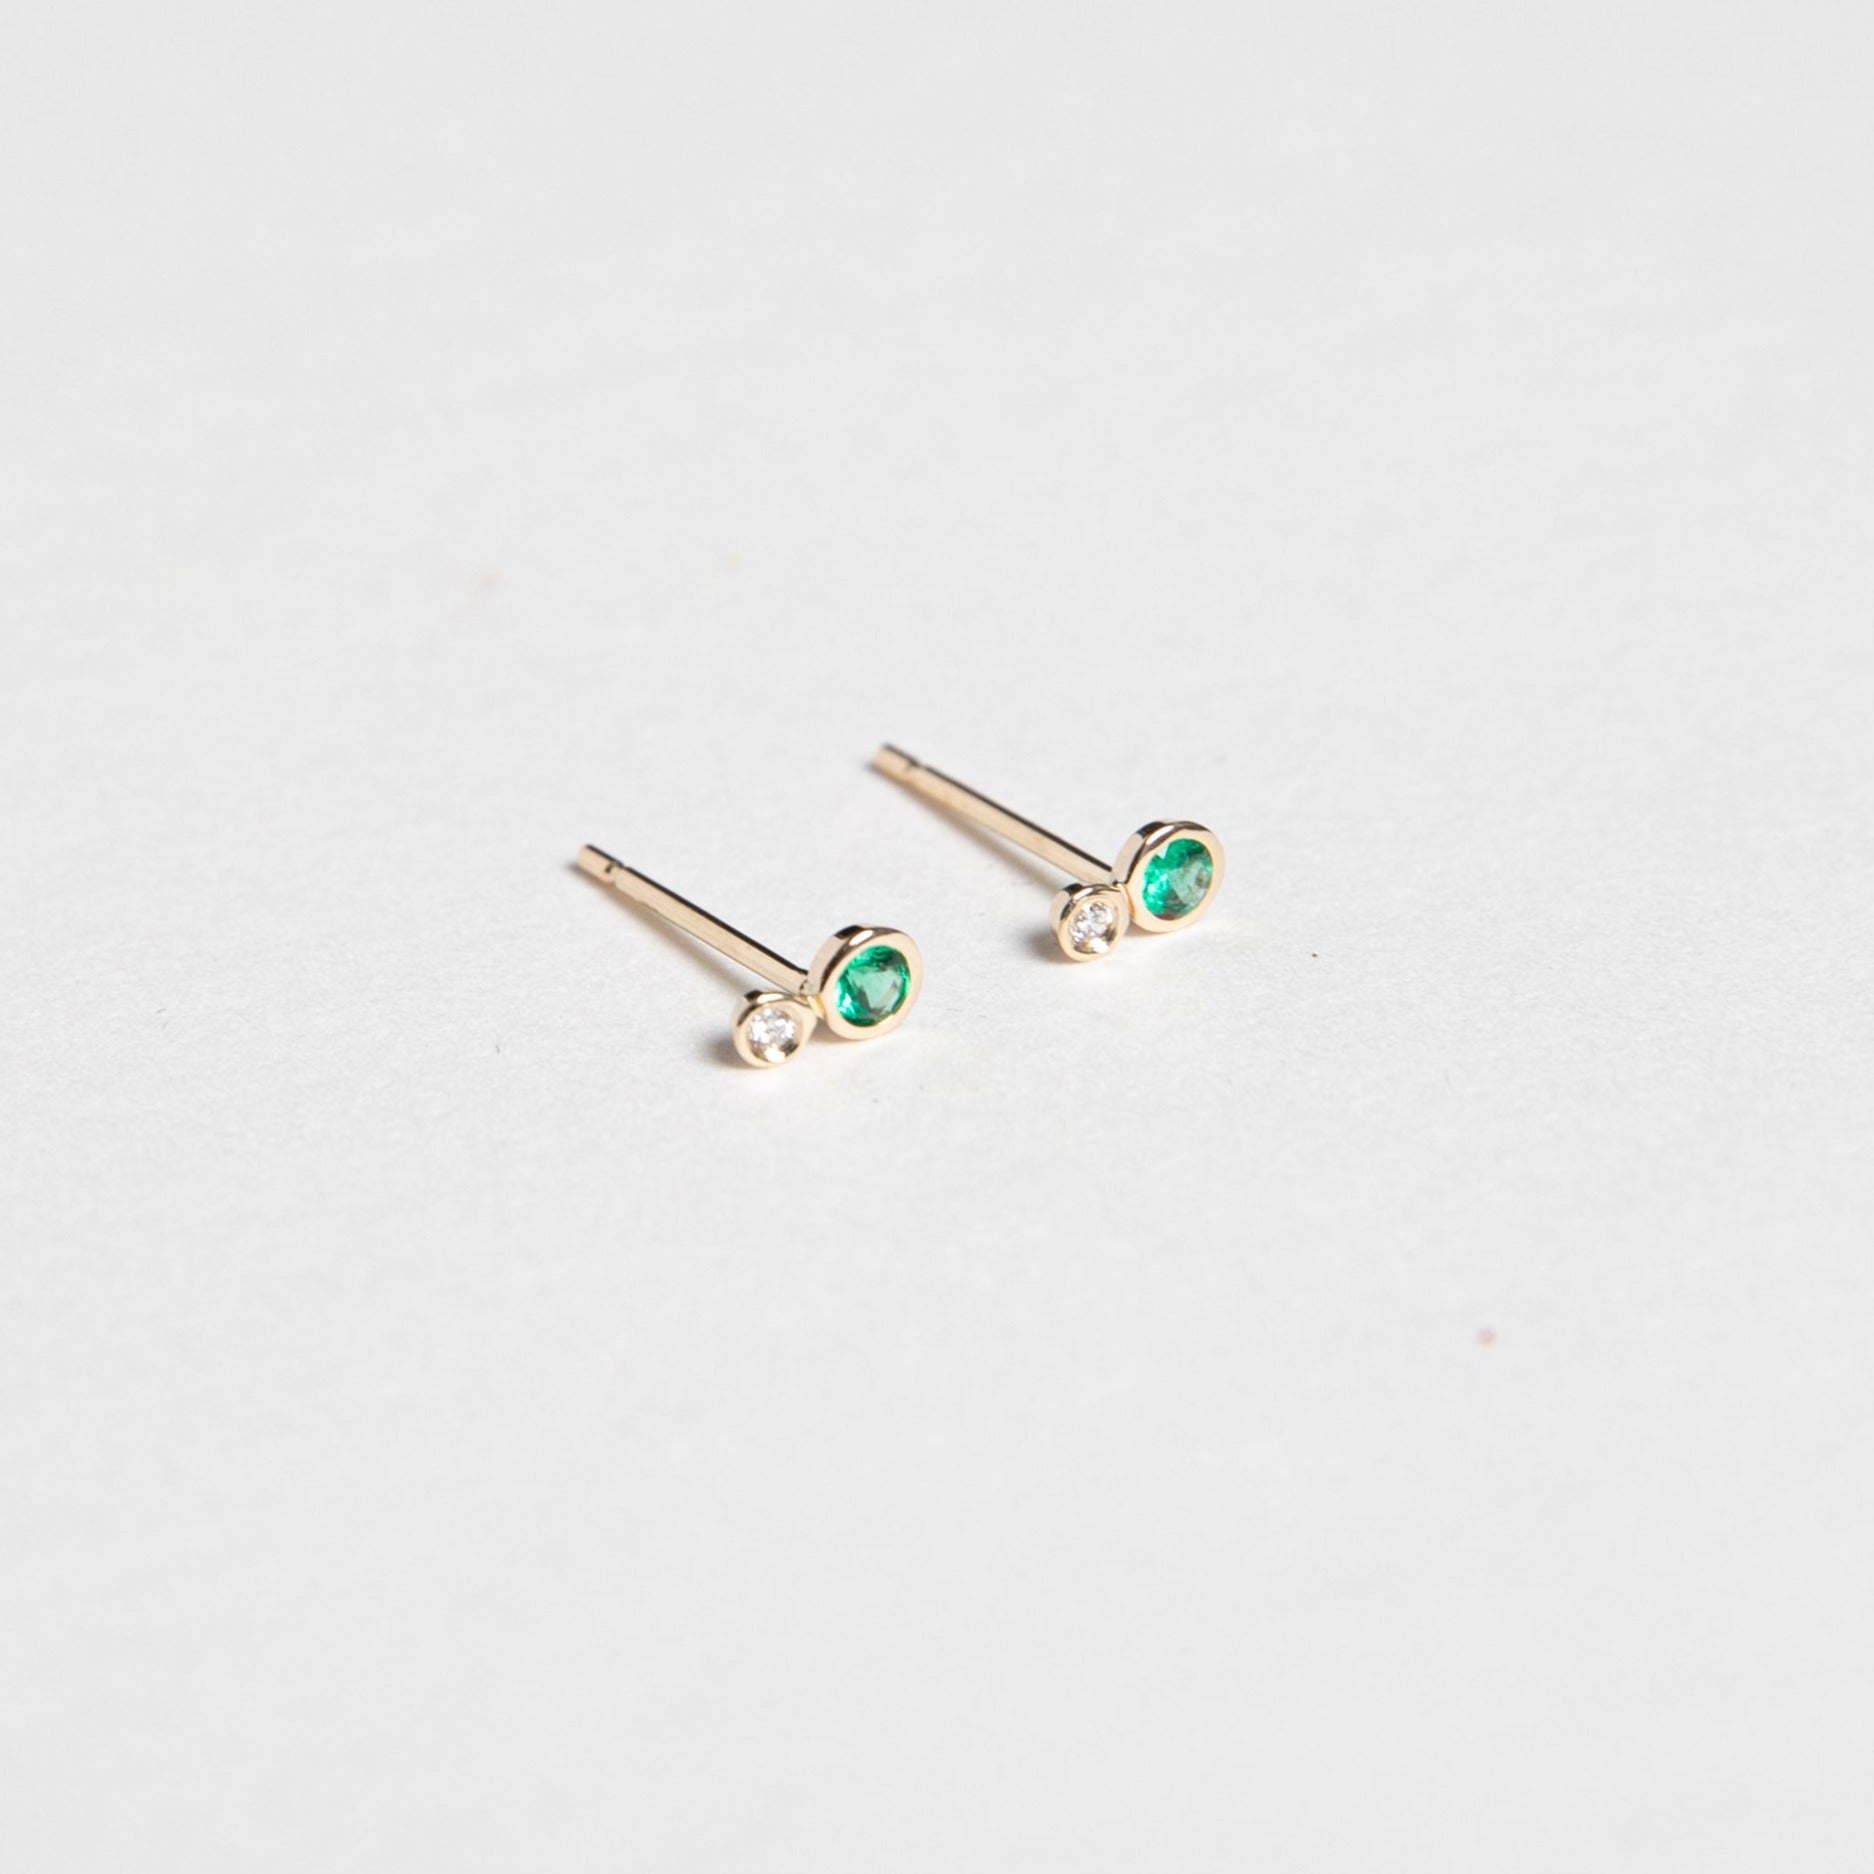 Kiki Alternative Earrings in 14k Gold set with Emeralds by SHW Fine Jewelry New York City